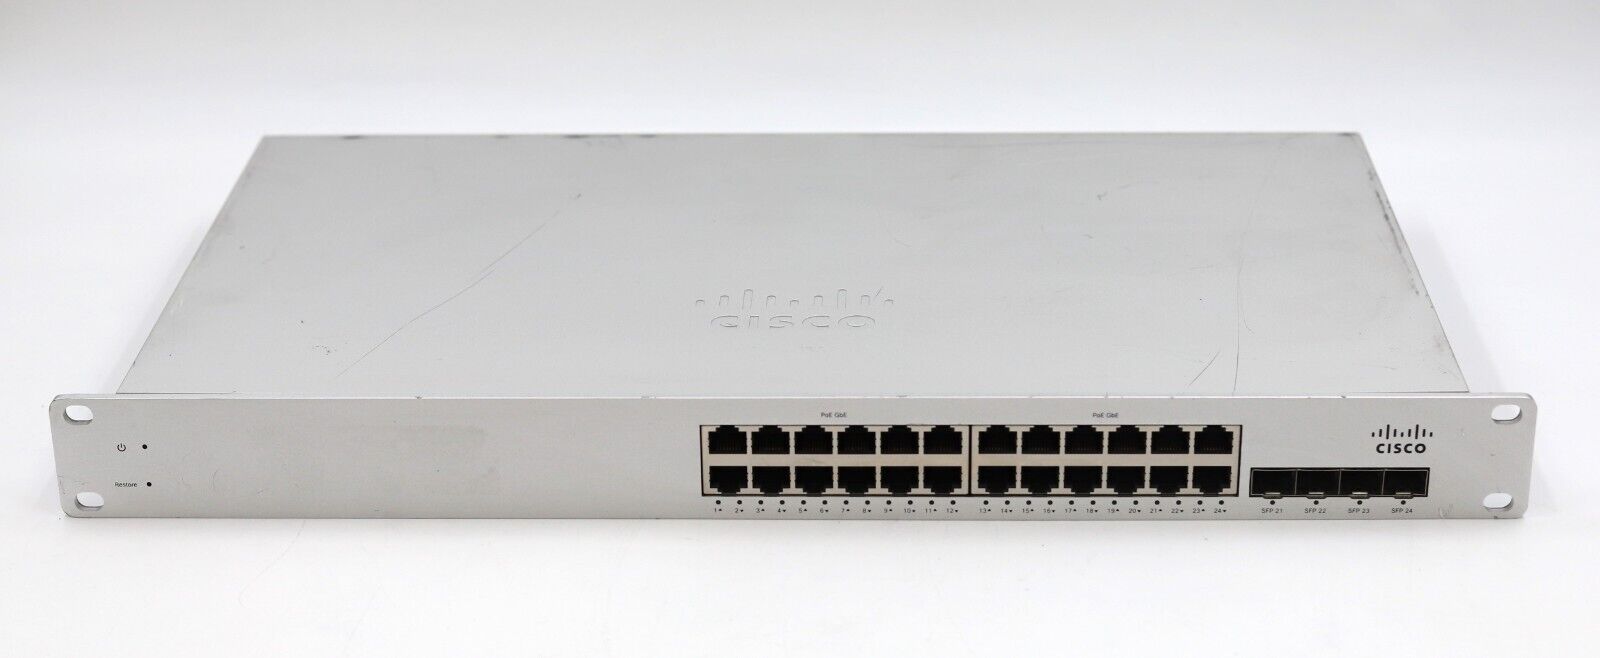 Cisco Meraki MS220-24P-HW 24-Port POE Gigabit Ethernet Switch P/N: 600-20040